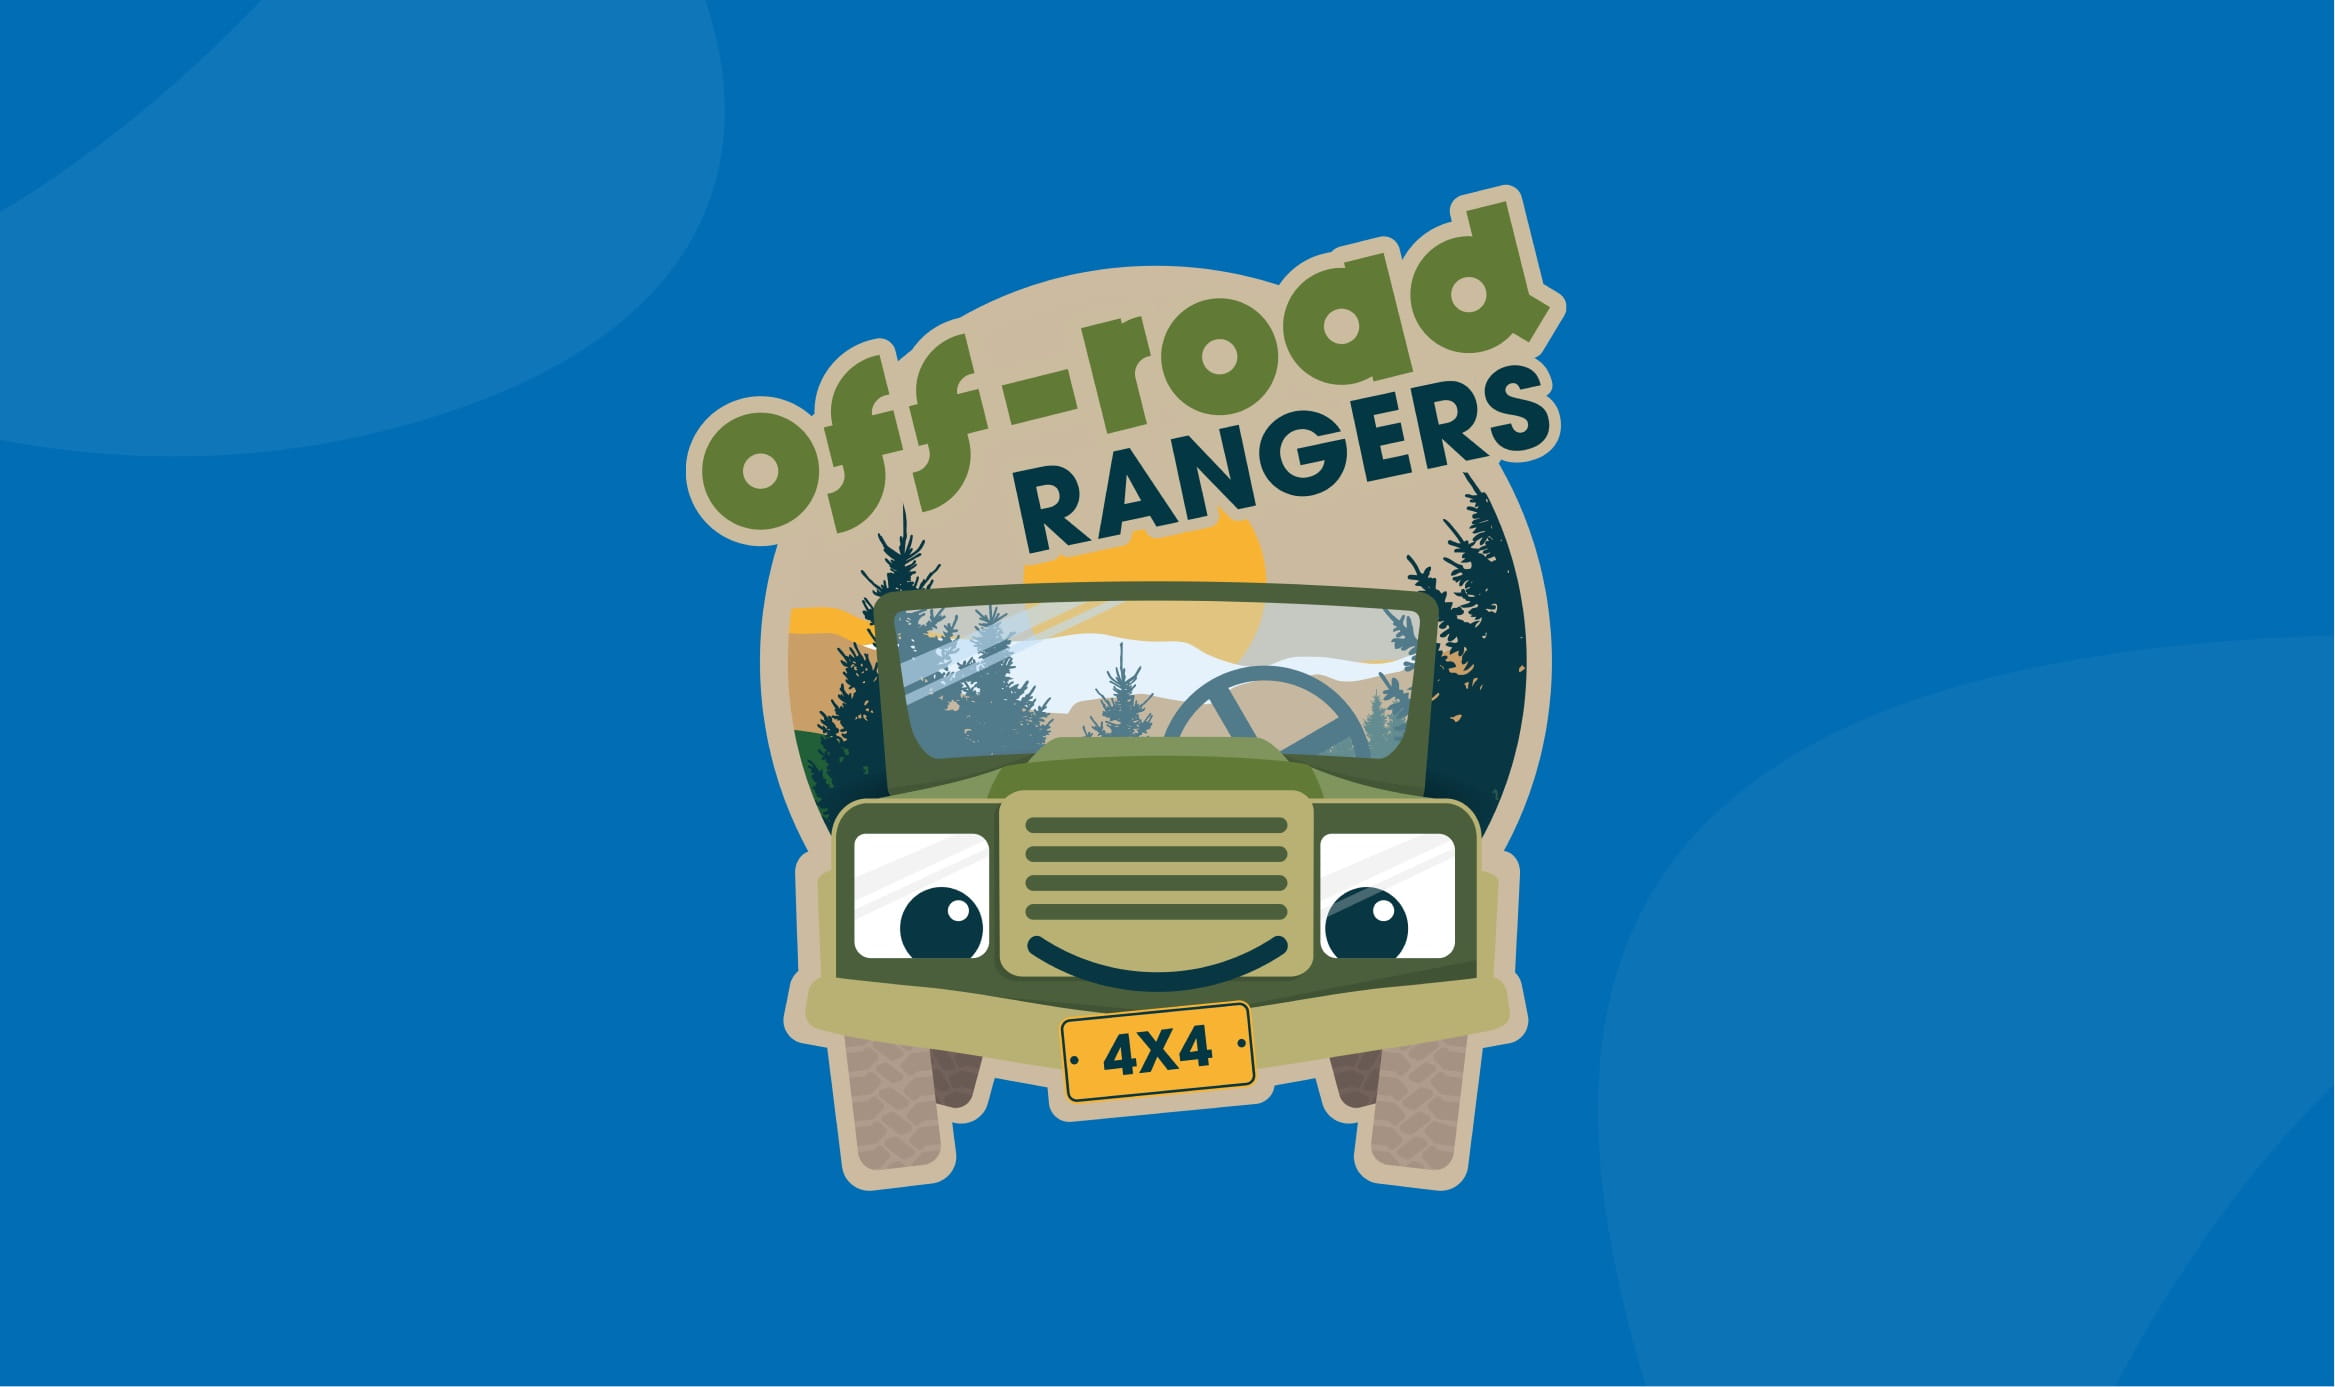 Off-Road Rangers activity image